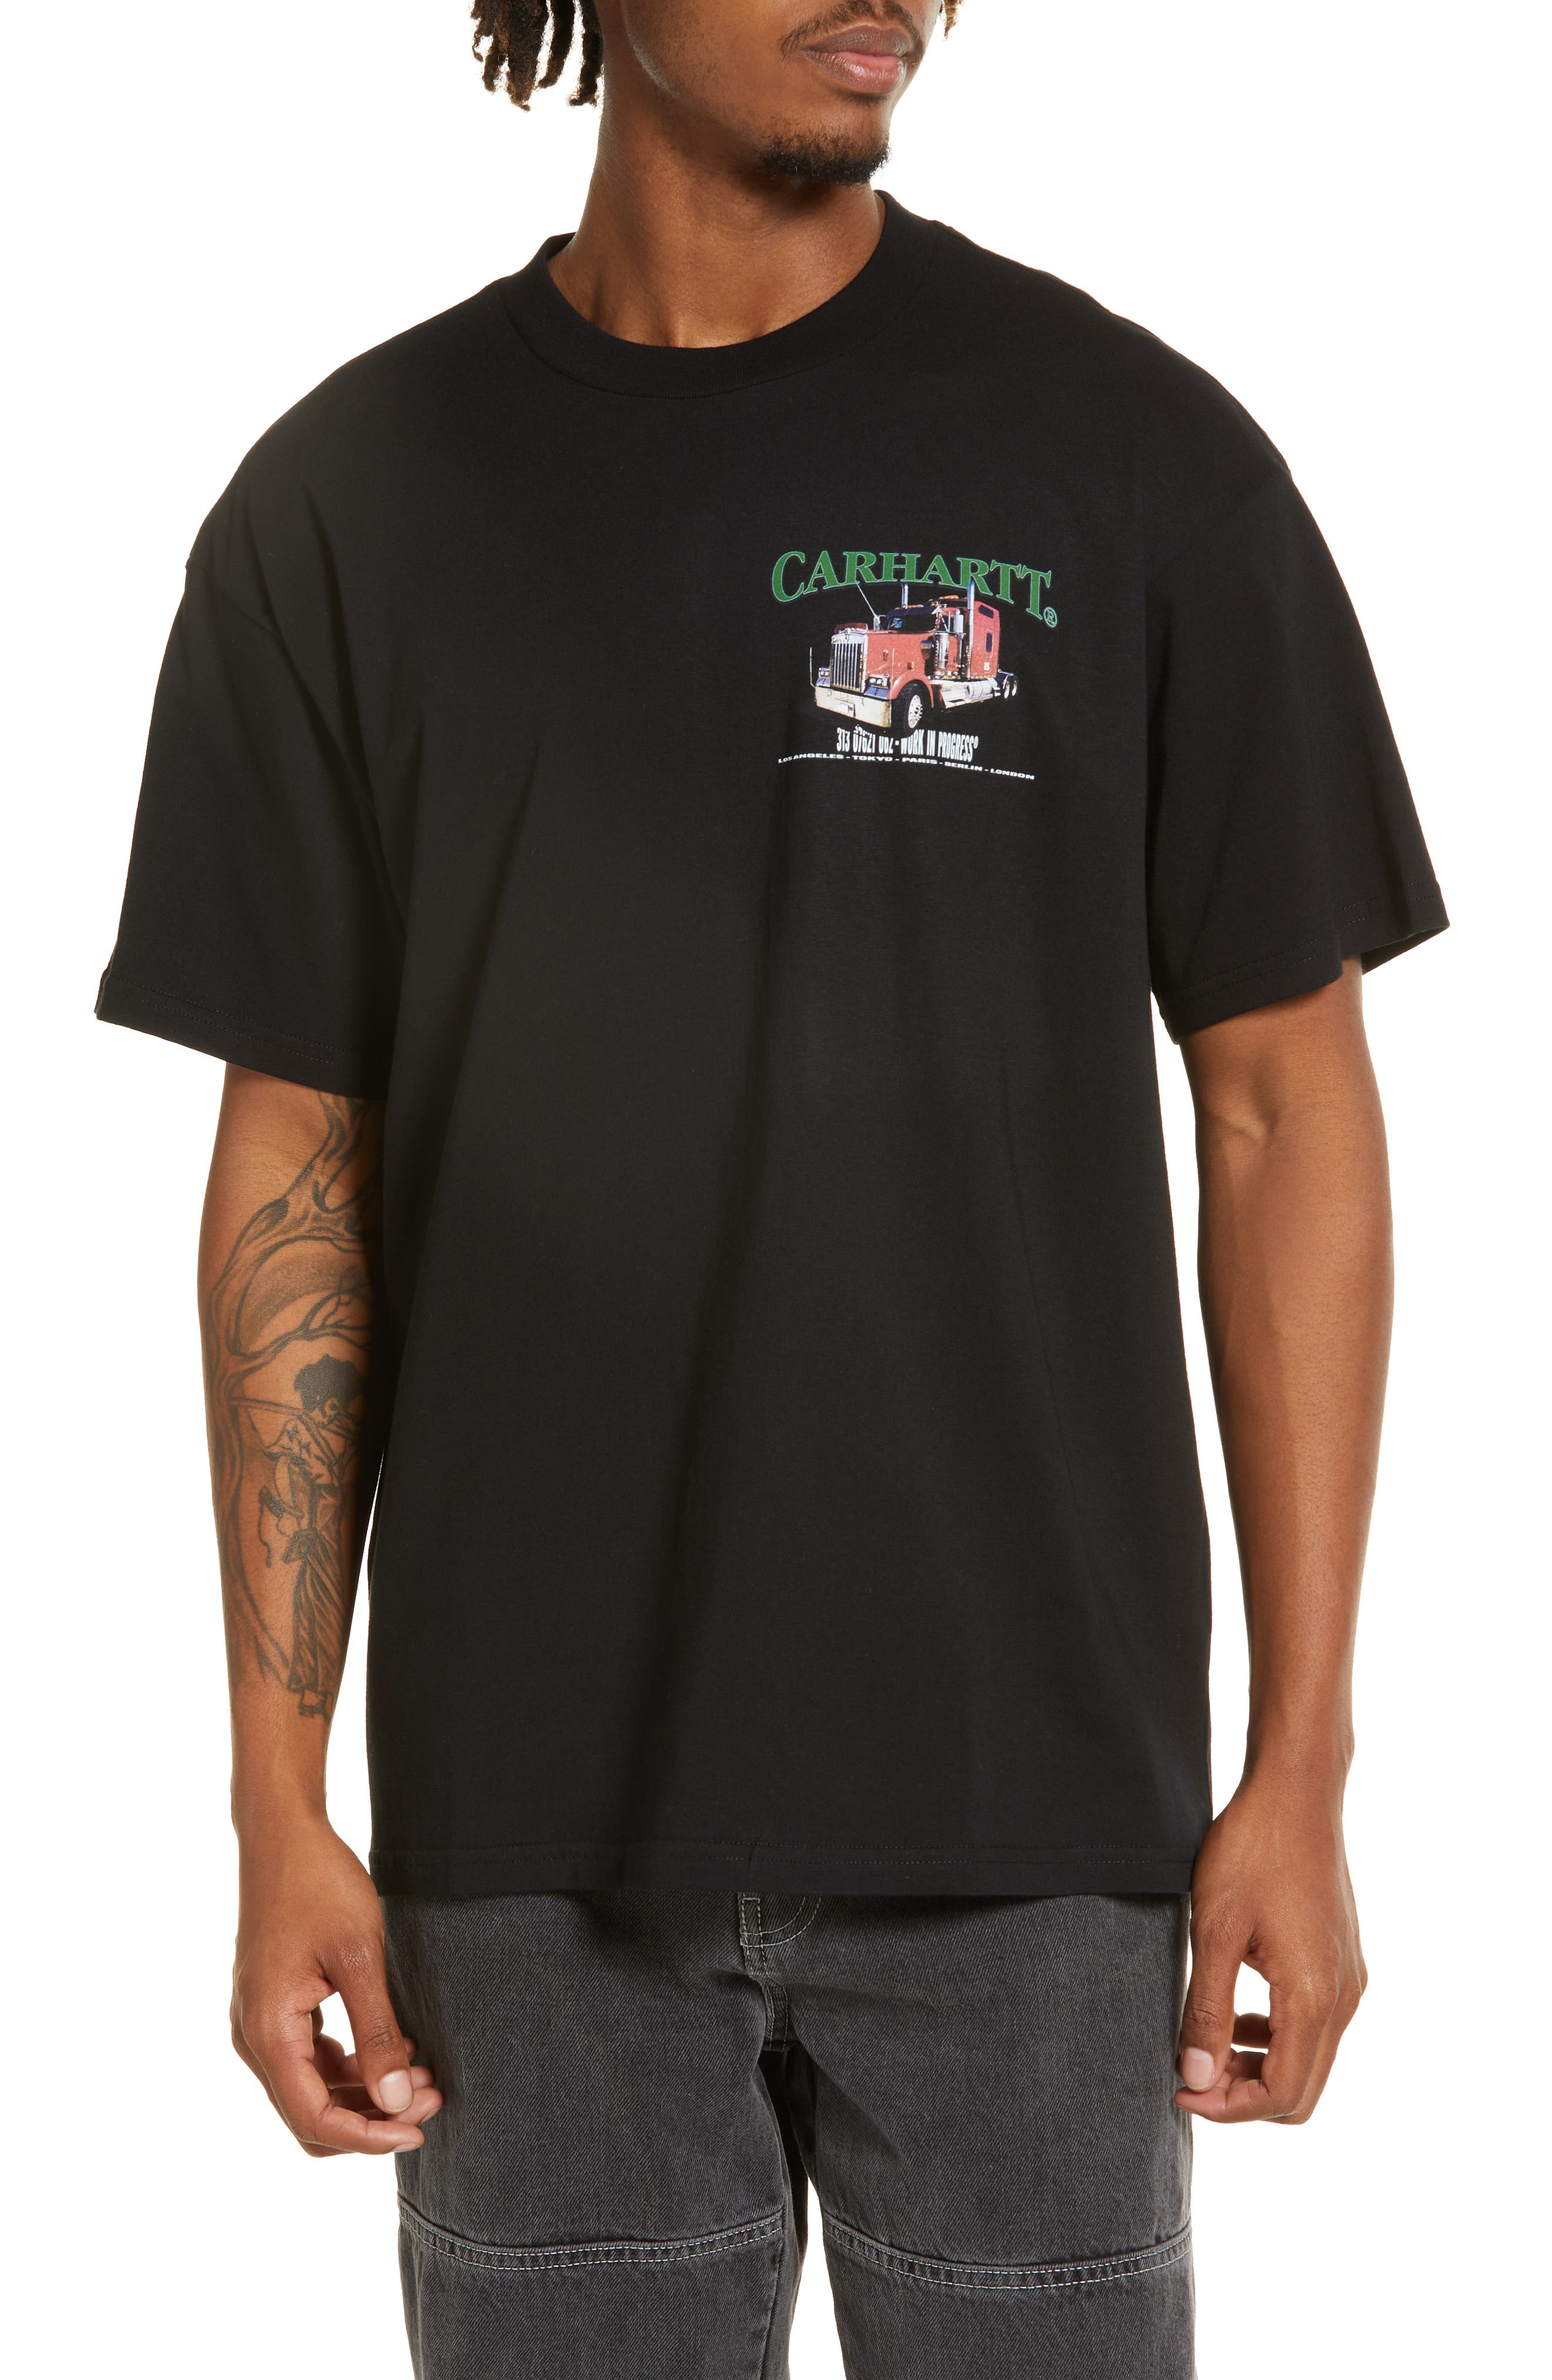 Carhartt señores t-shirt Graphic hard work opaca camisa S M L XL XXL Nuevo 